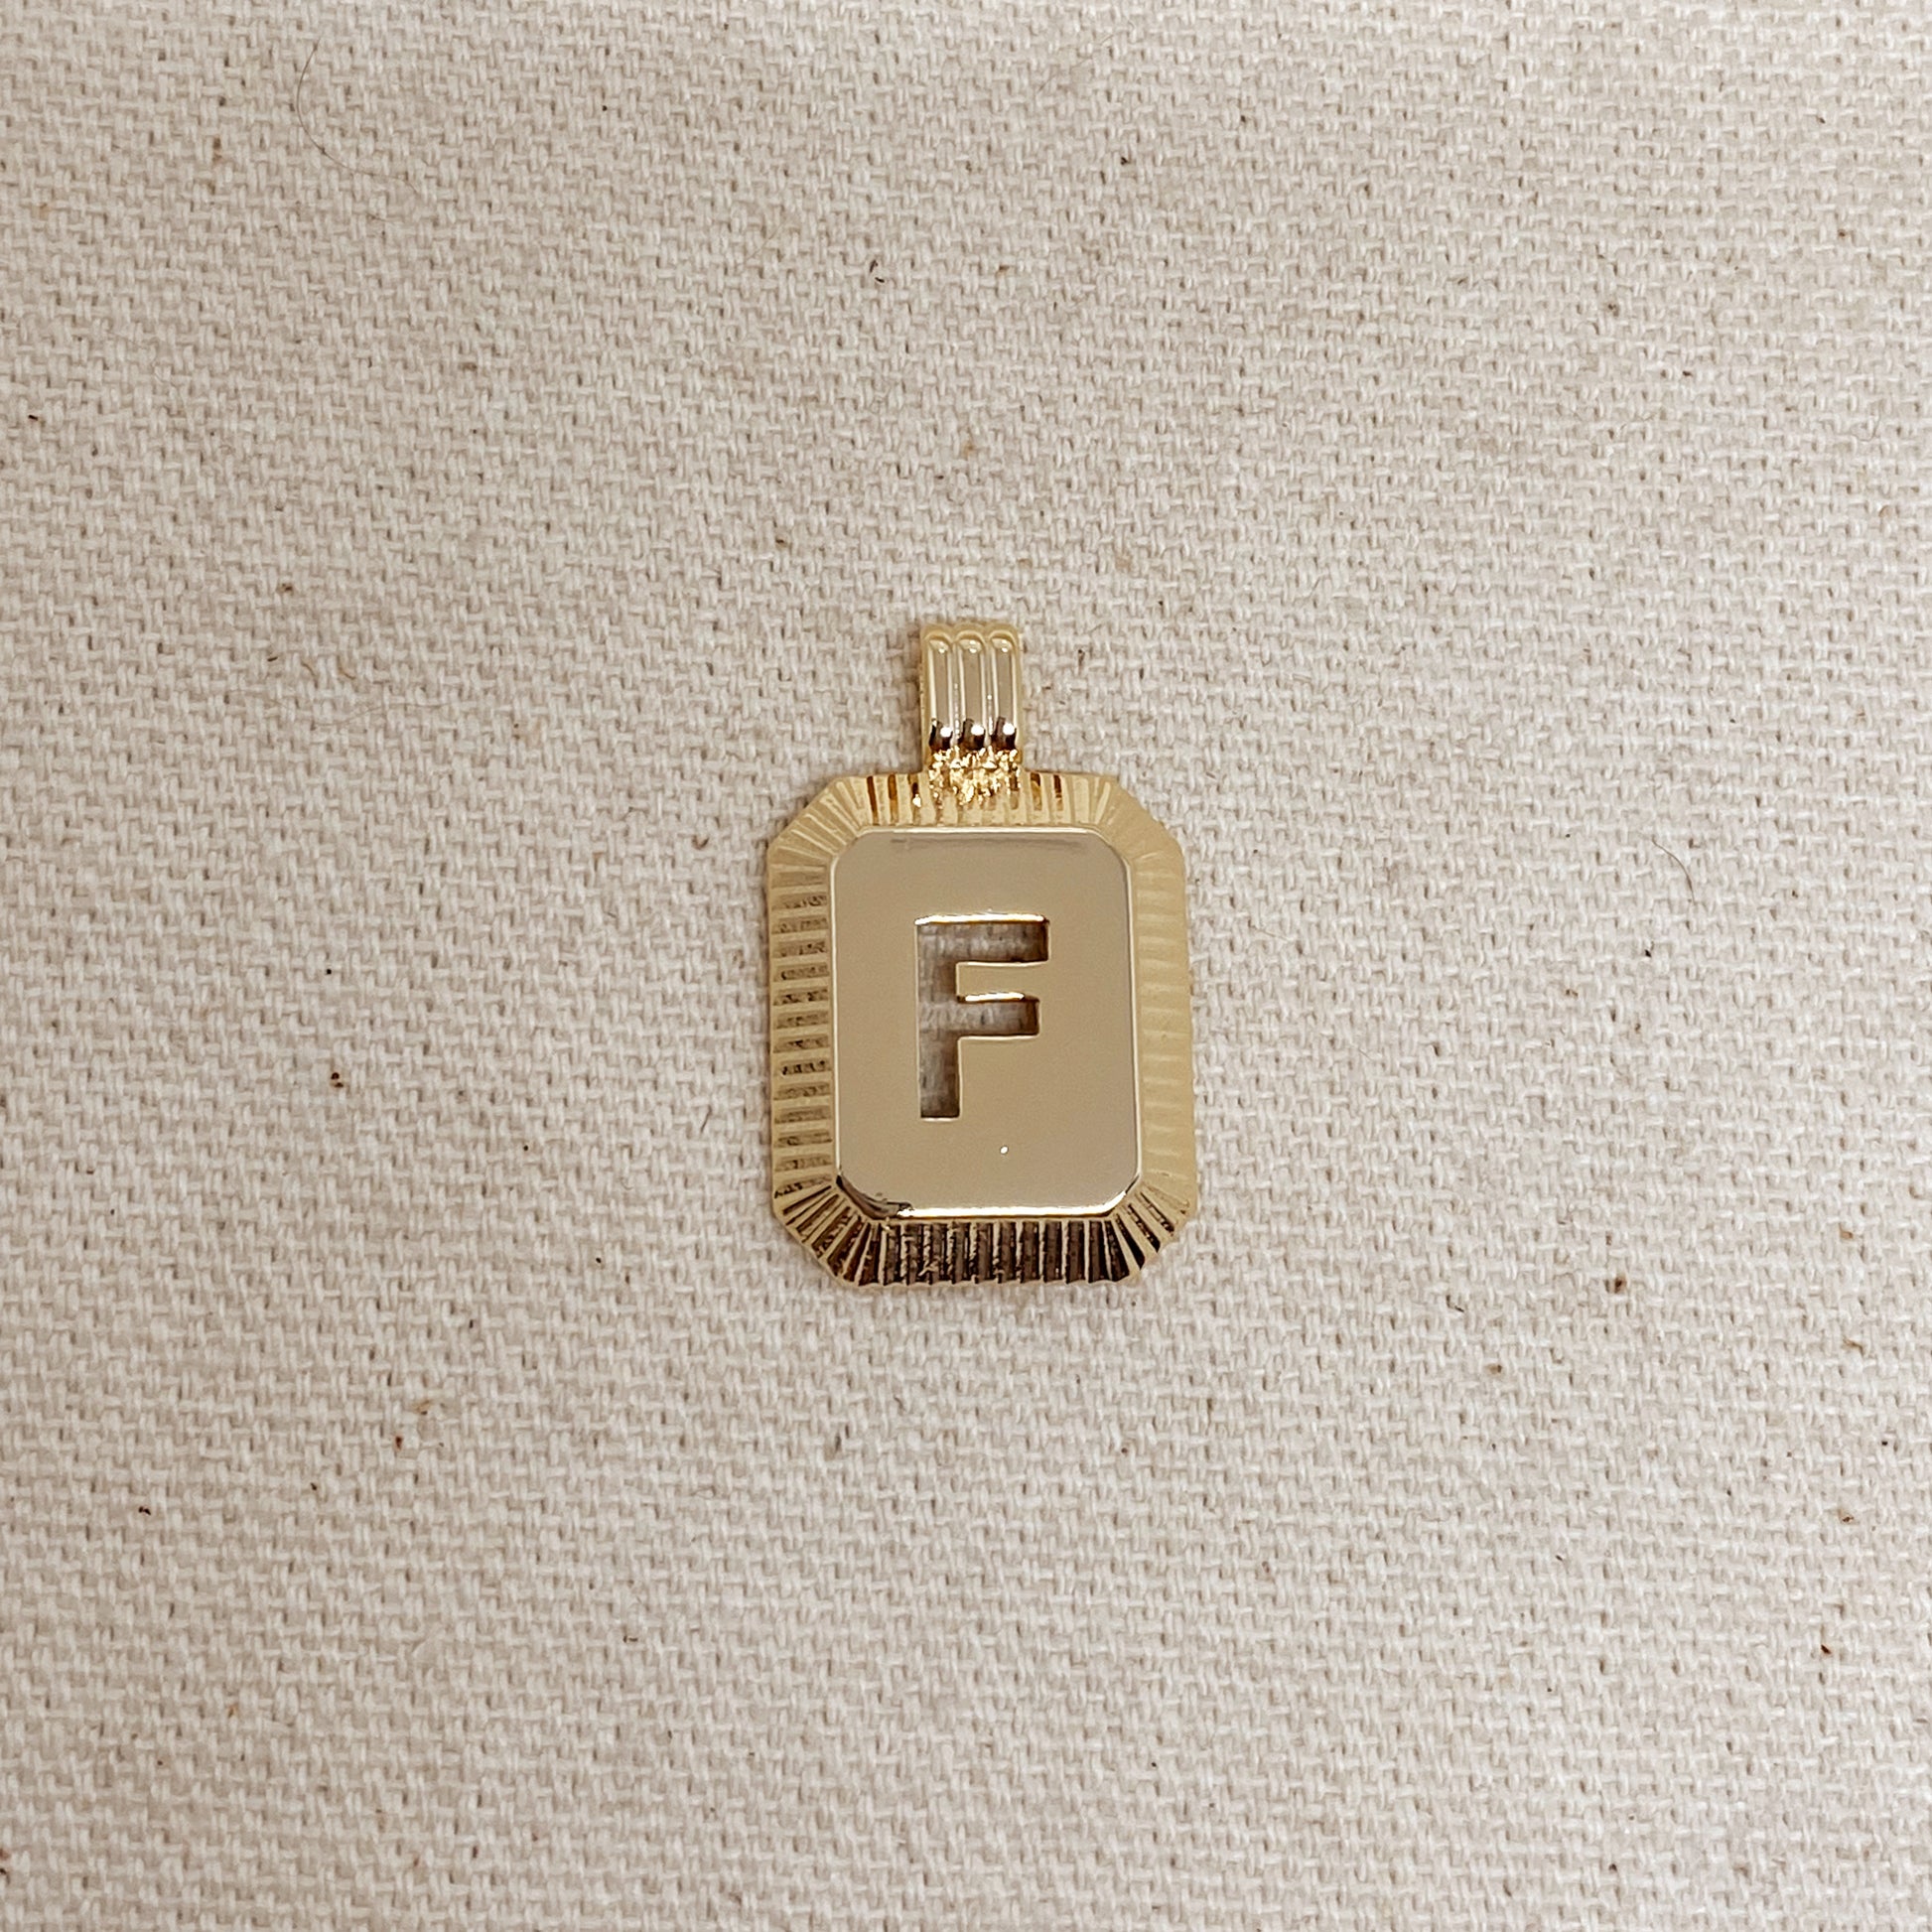 GoldFi 18k Gold Filled Initial Plate Pendant Letter F